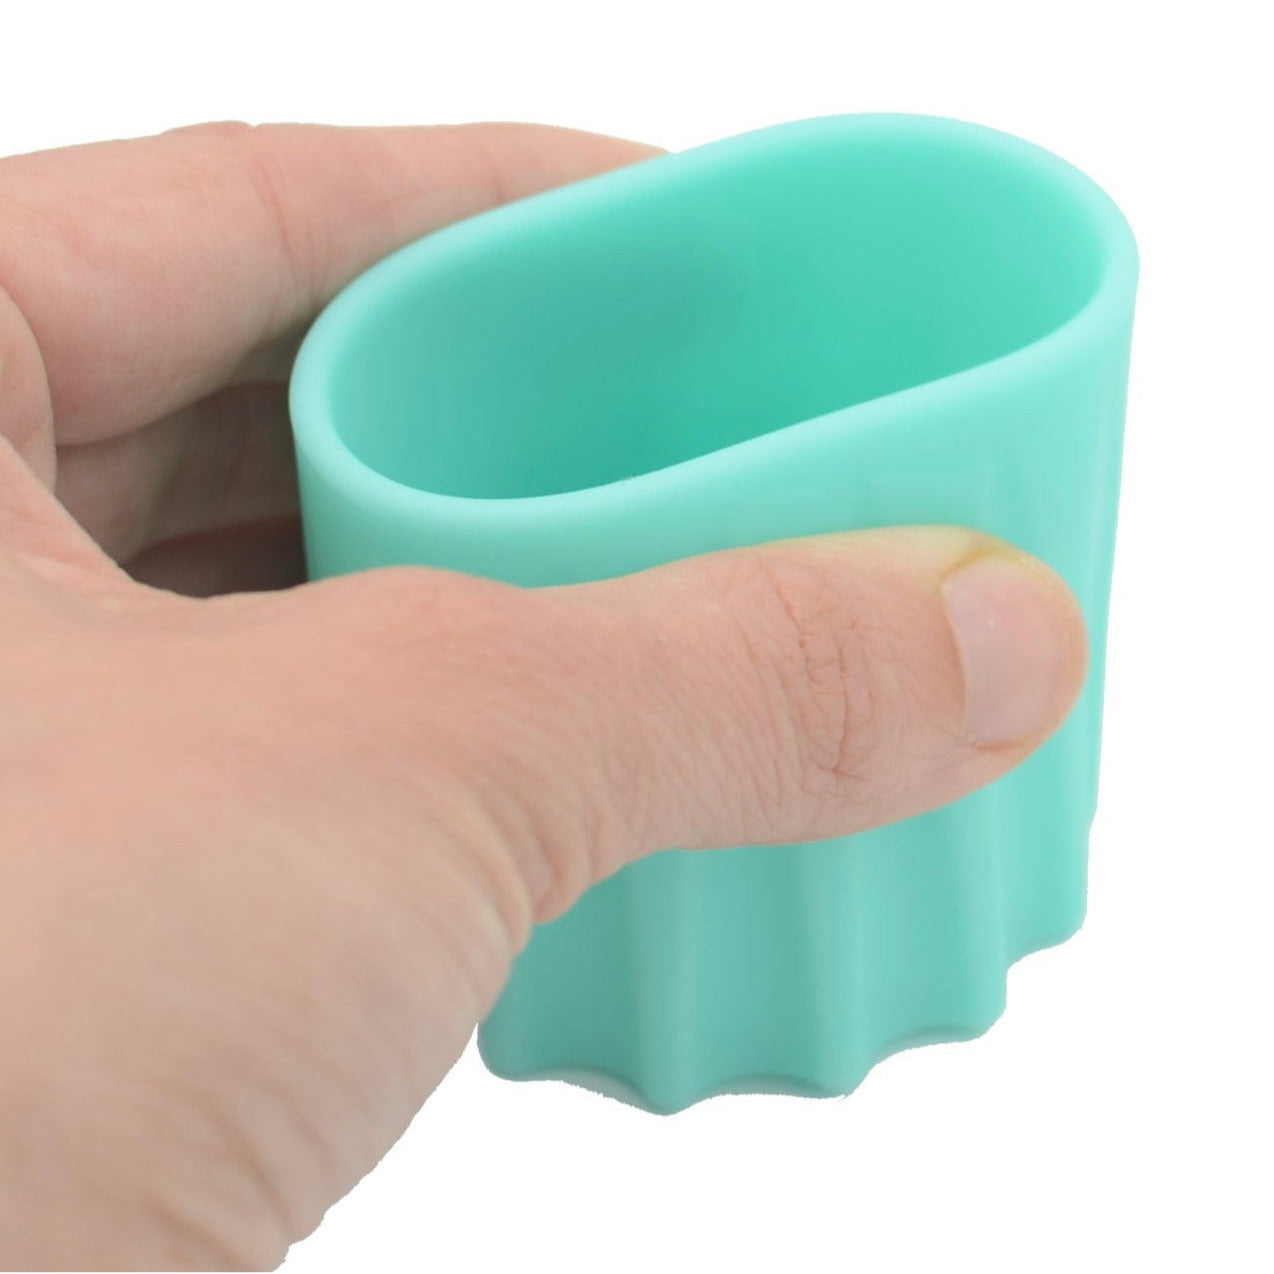 3 oz Flexible Silicone Baby/Toddler Cup